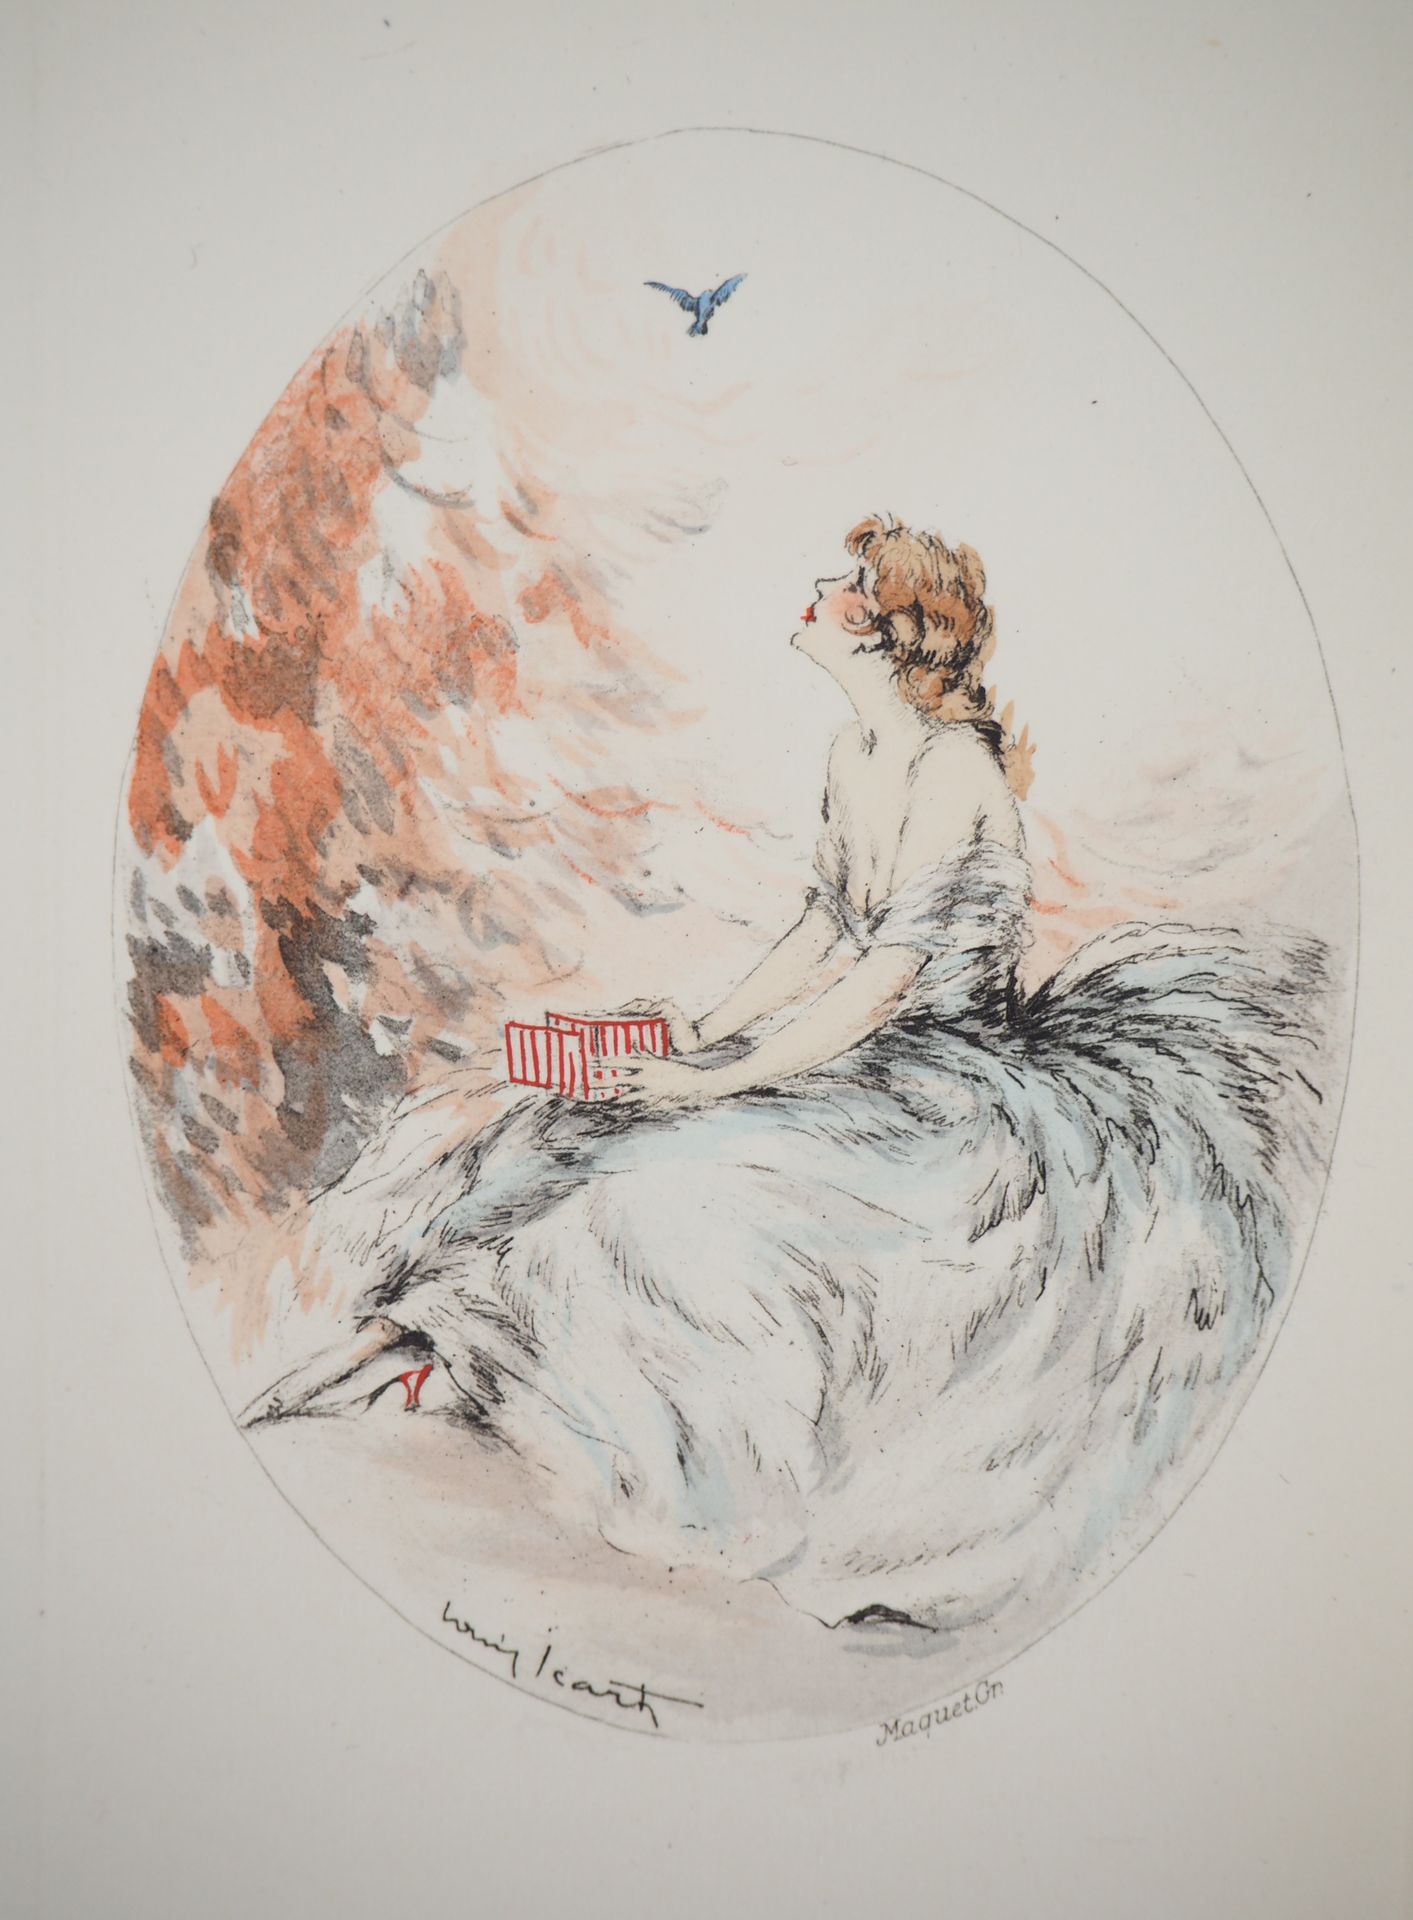 Louis ICART Louis ICART (1888 - 1950)

年轻的女人和被释放的鸟

原始蚀刻和钢网

板块中的签名

牛皮纸上 16 x 2&hellip;